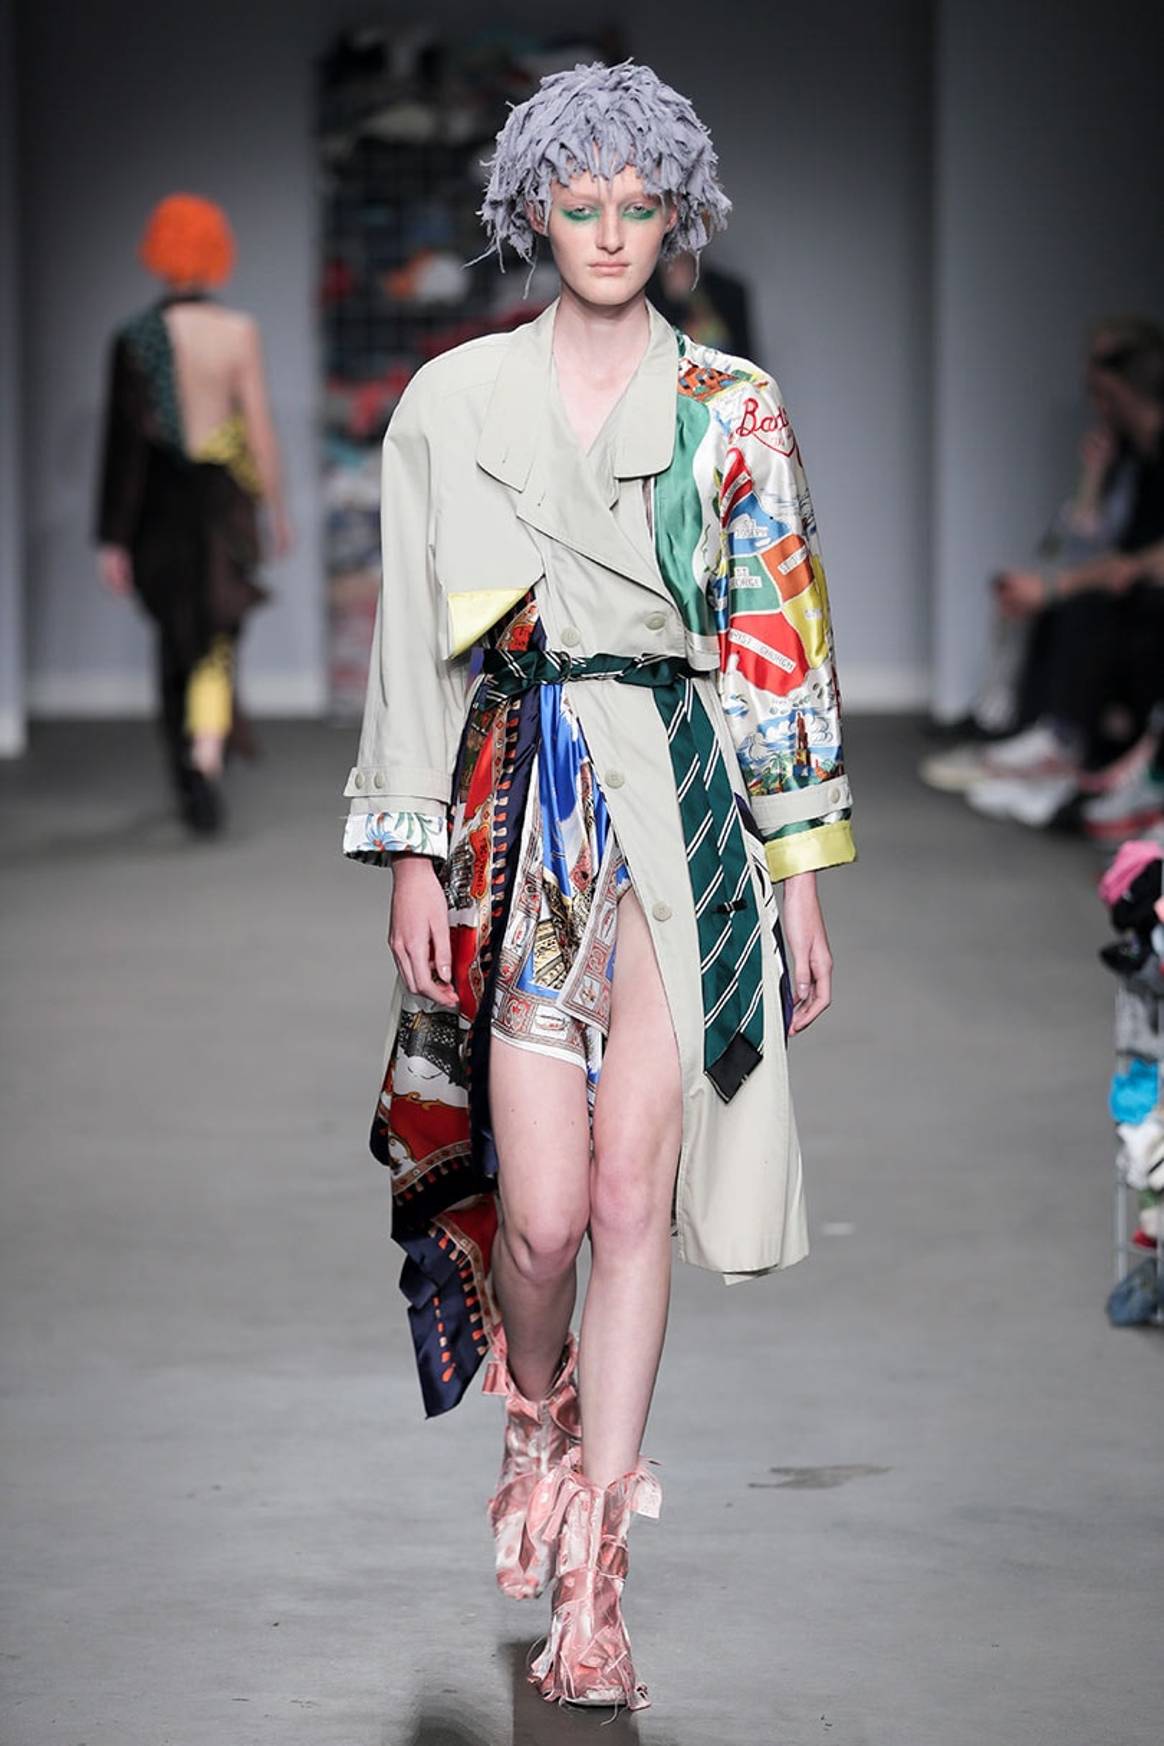 In Beeld: Focus op duurzame mode tijdens Amsterdam Fashion Week